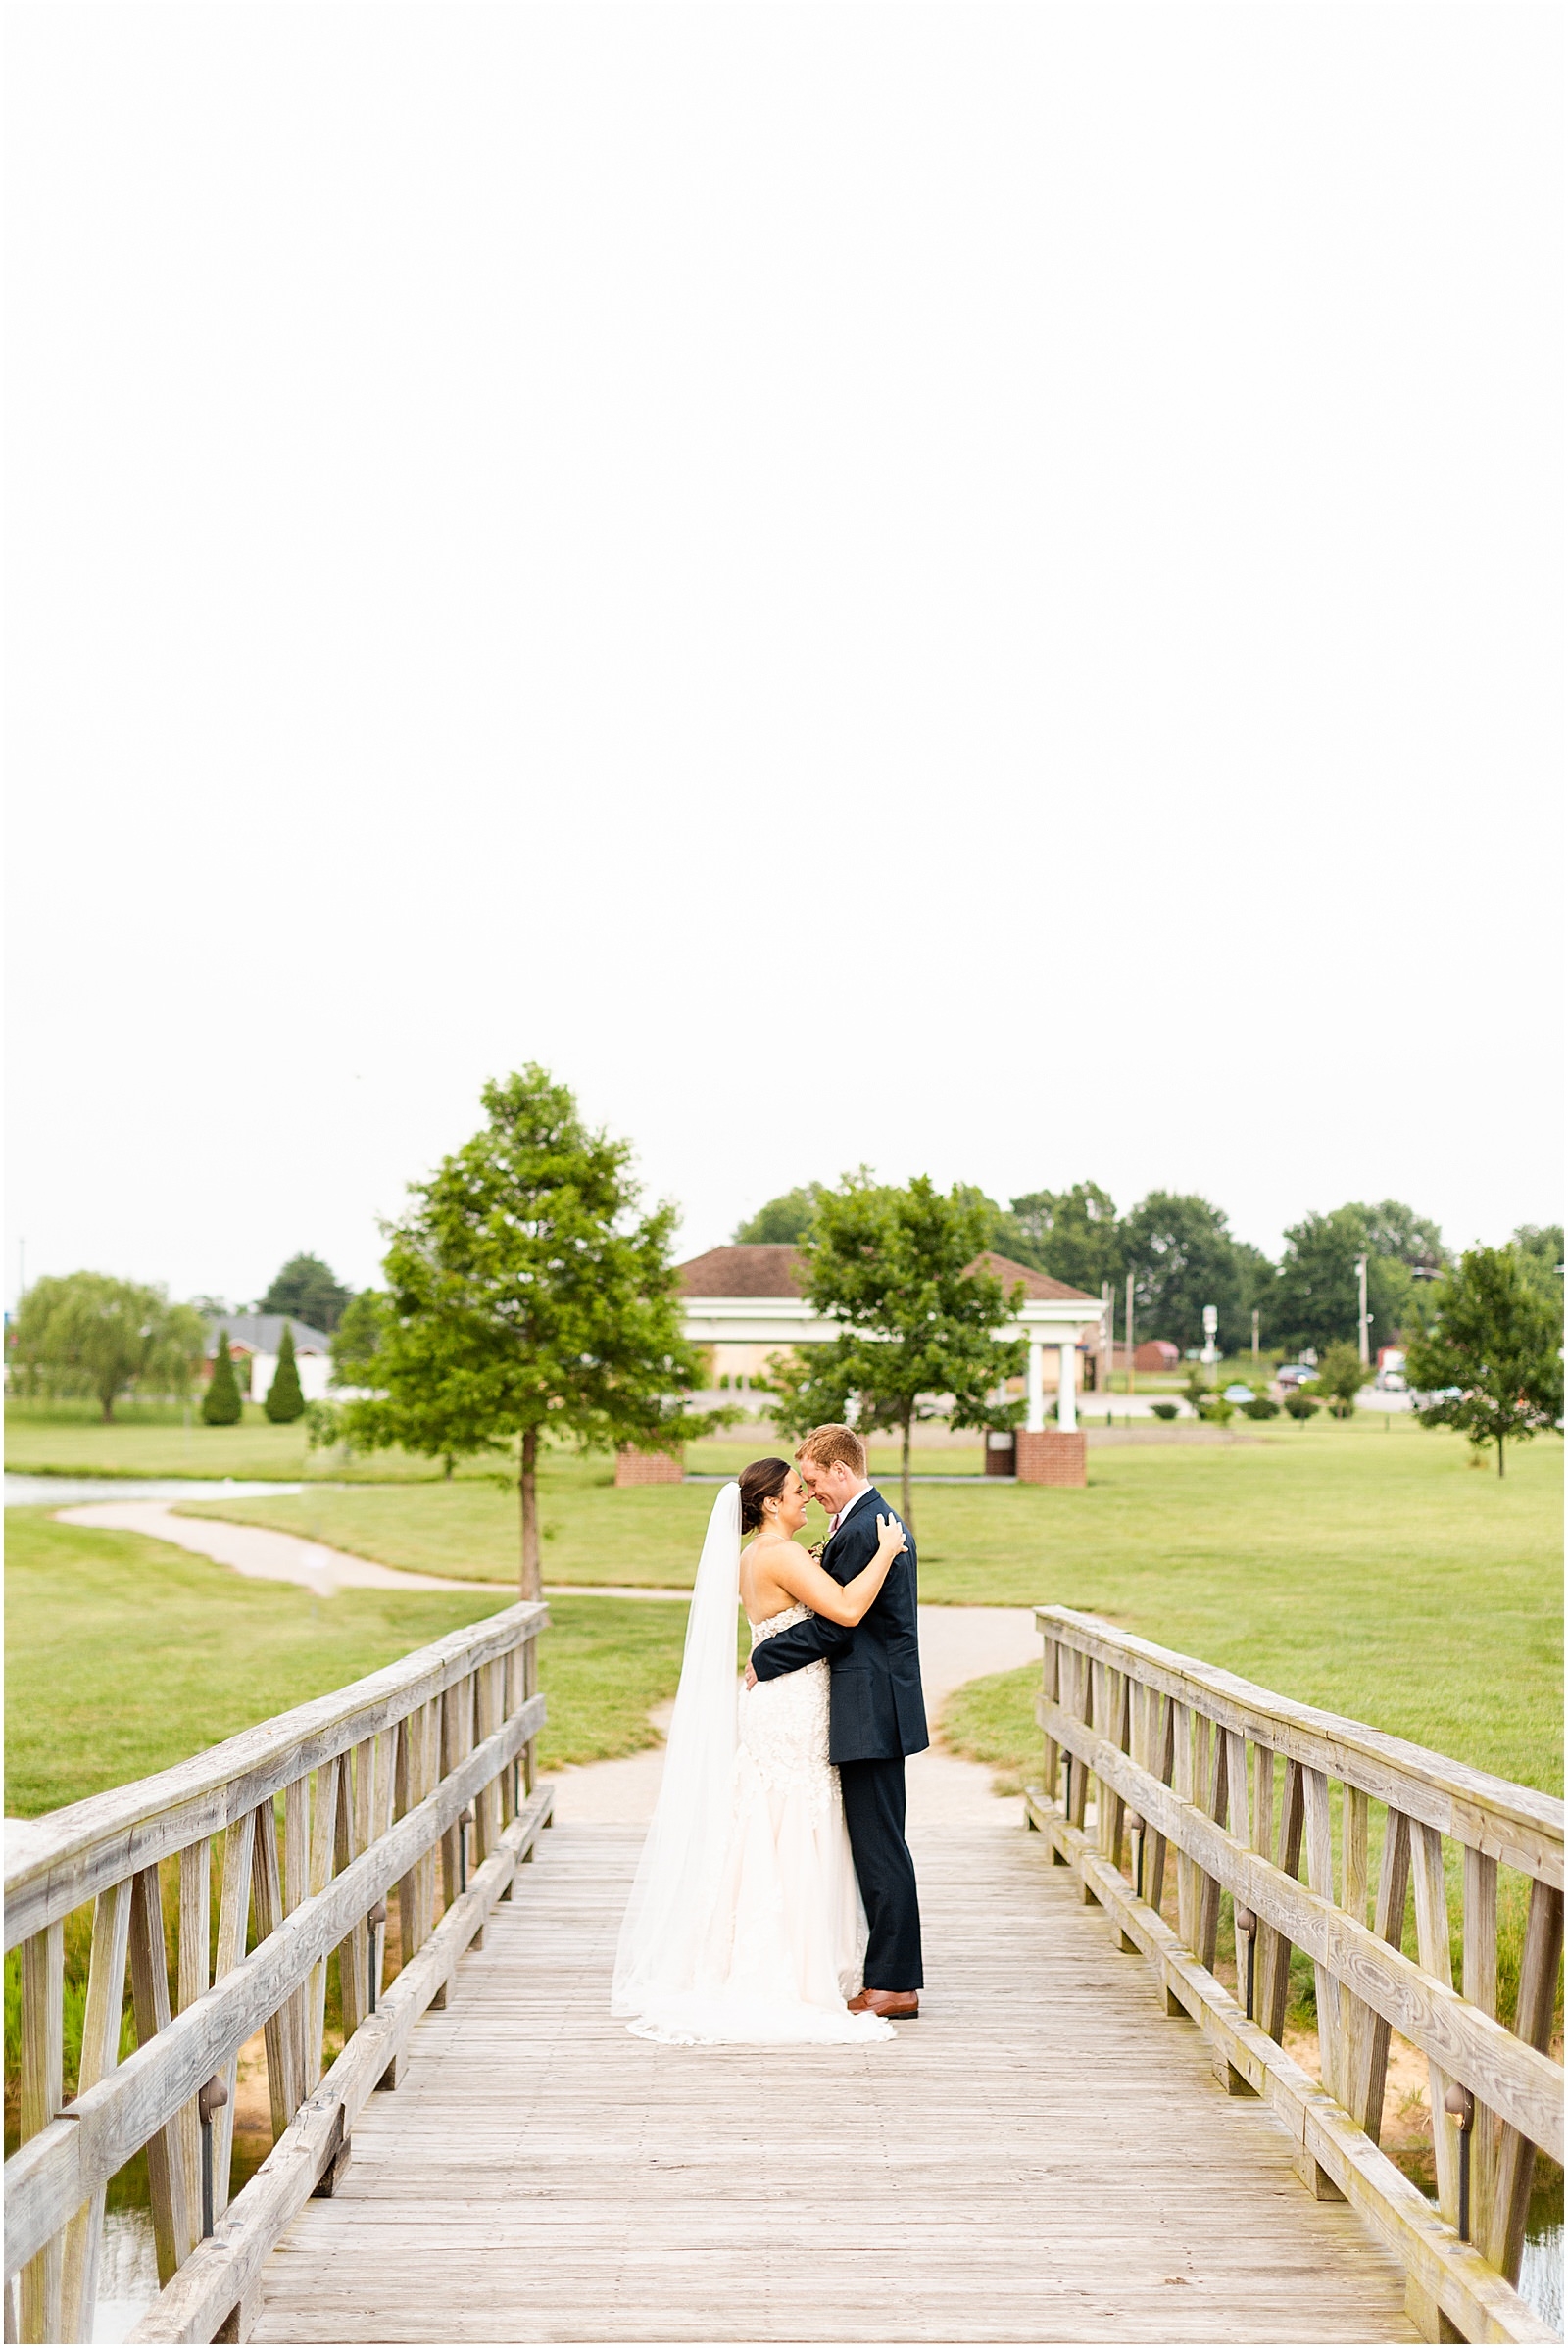 Deidra and Andrew | A Huntingburgh Indiana Wedding Bret and Brandie | Evansville Photographers | @bretandbrandie-0137.jpg